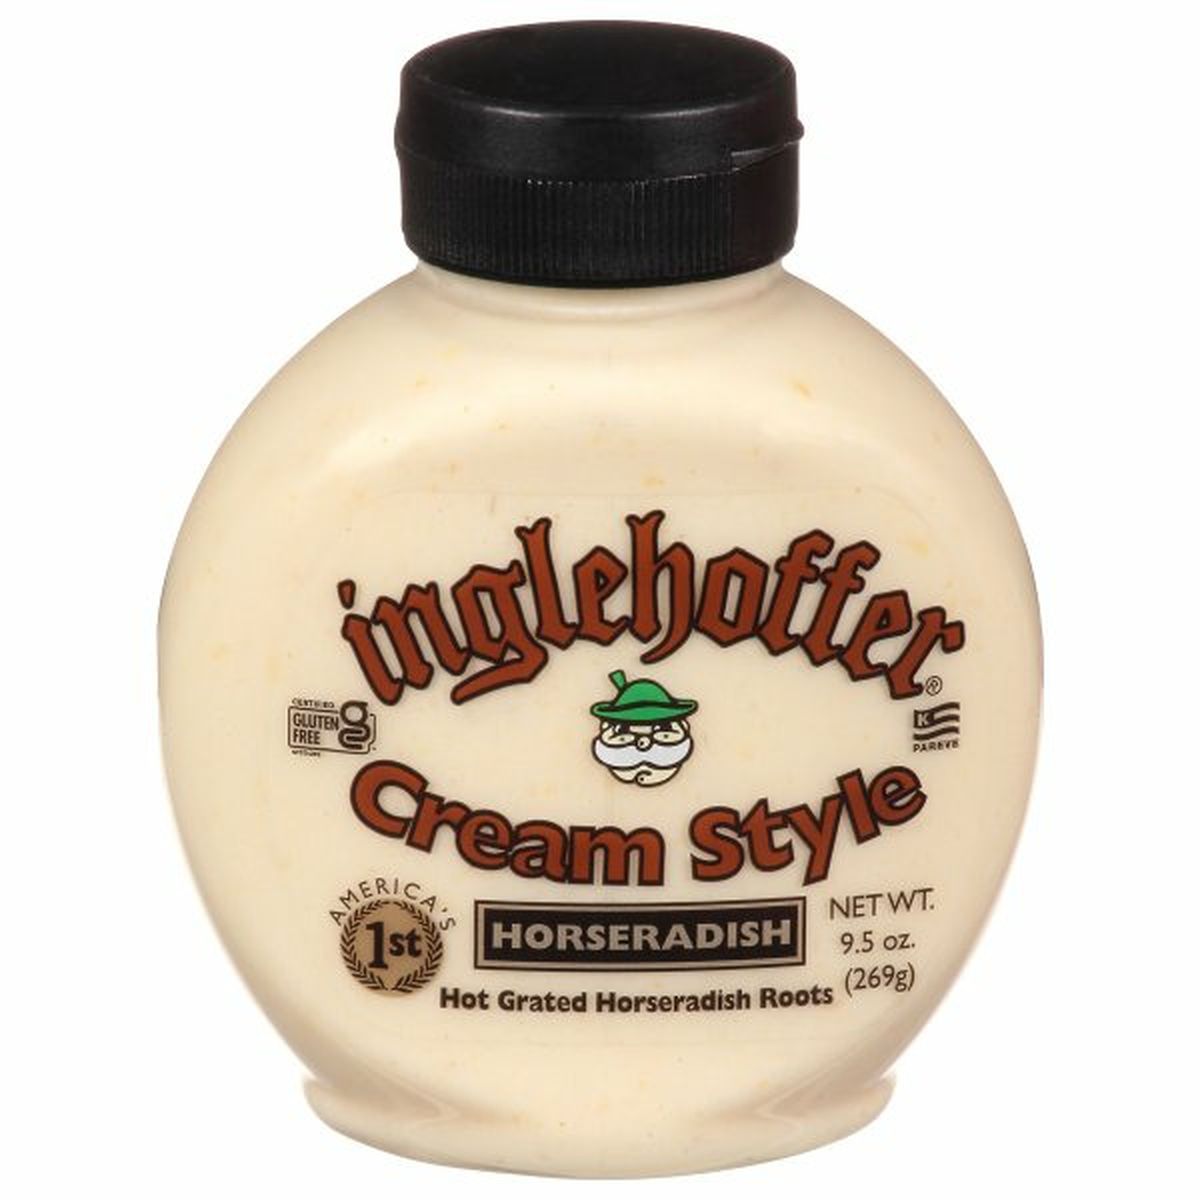 Calories in Inglehoffer Horseradish, Cream Style